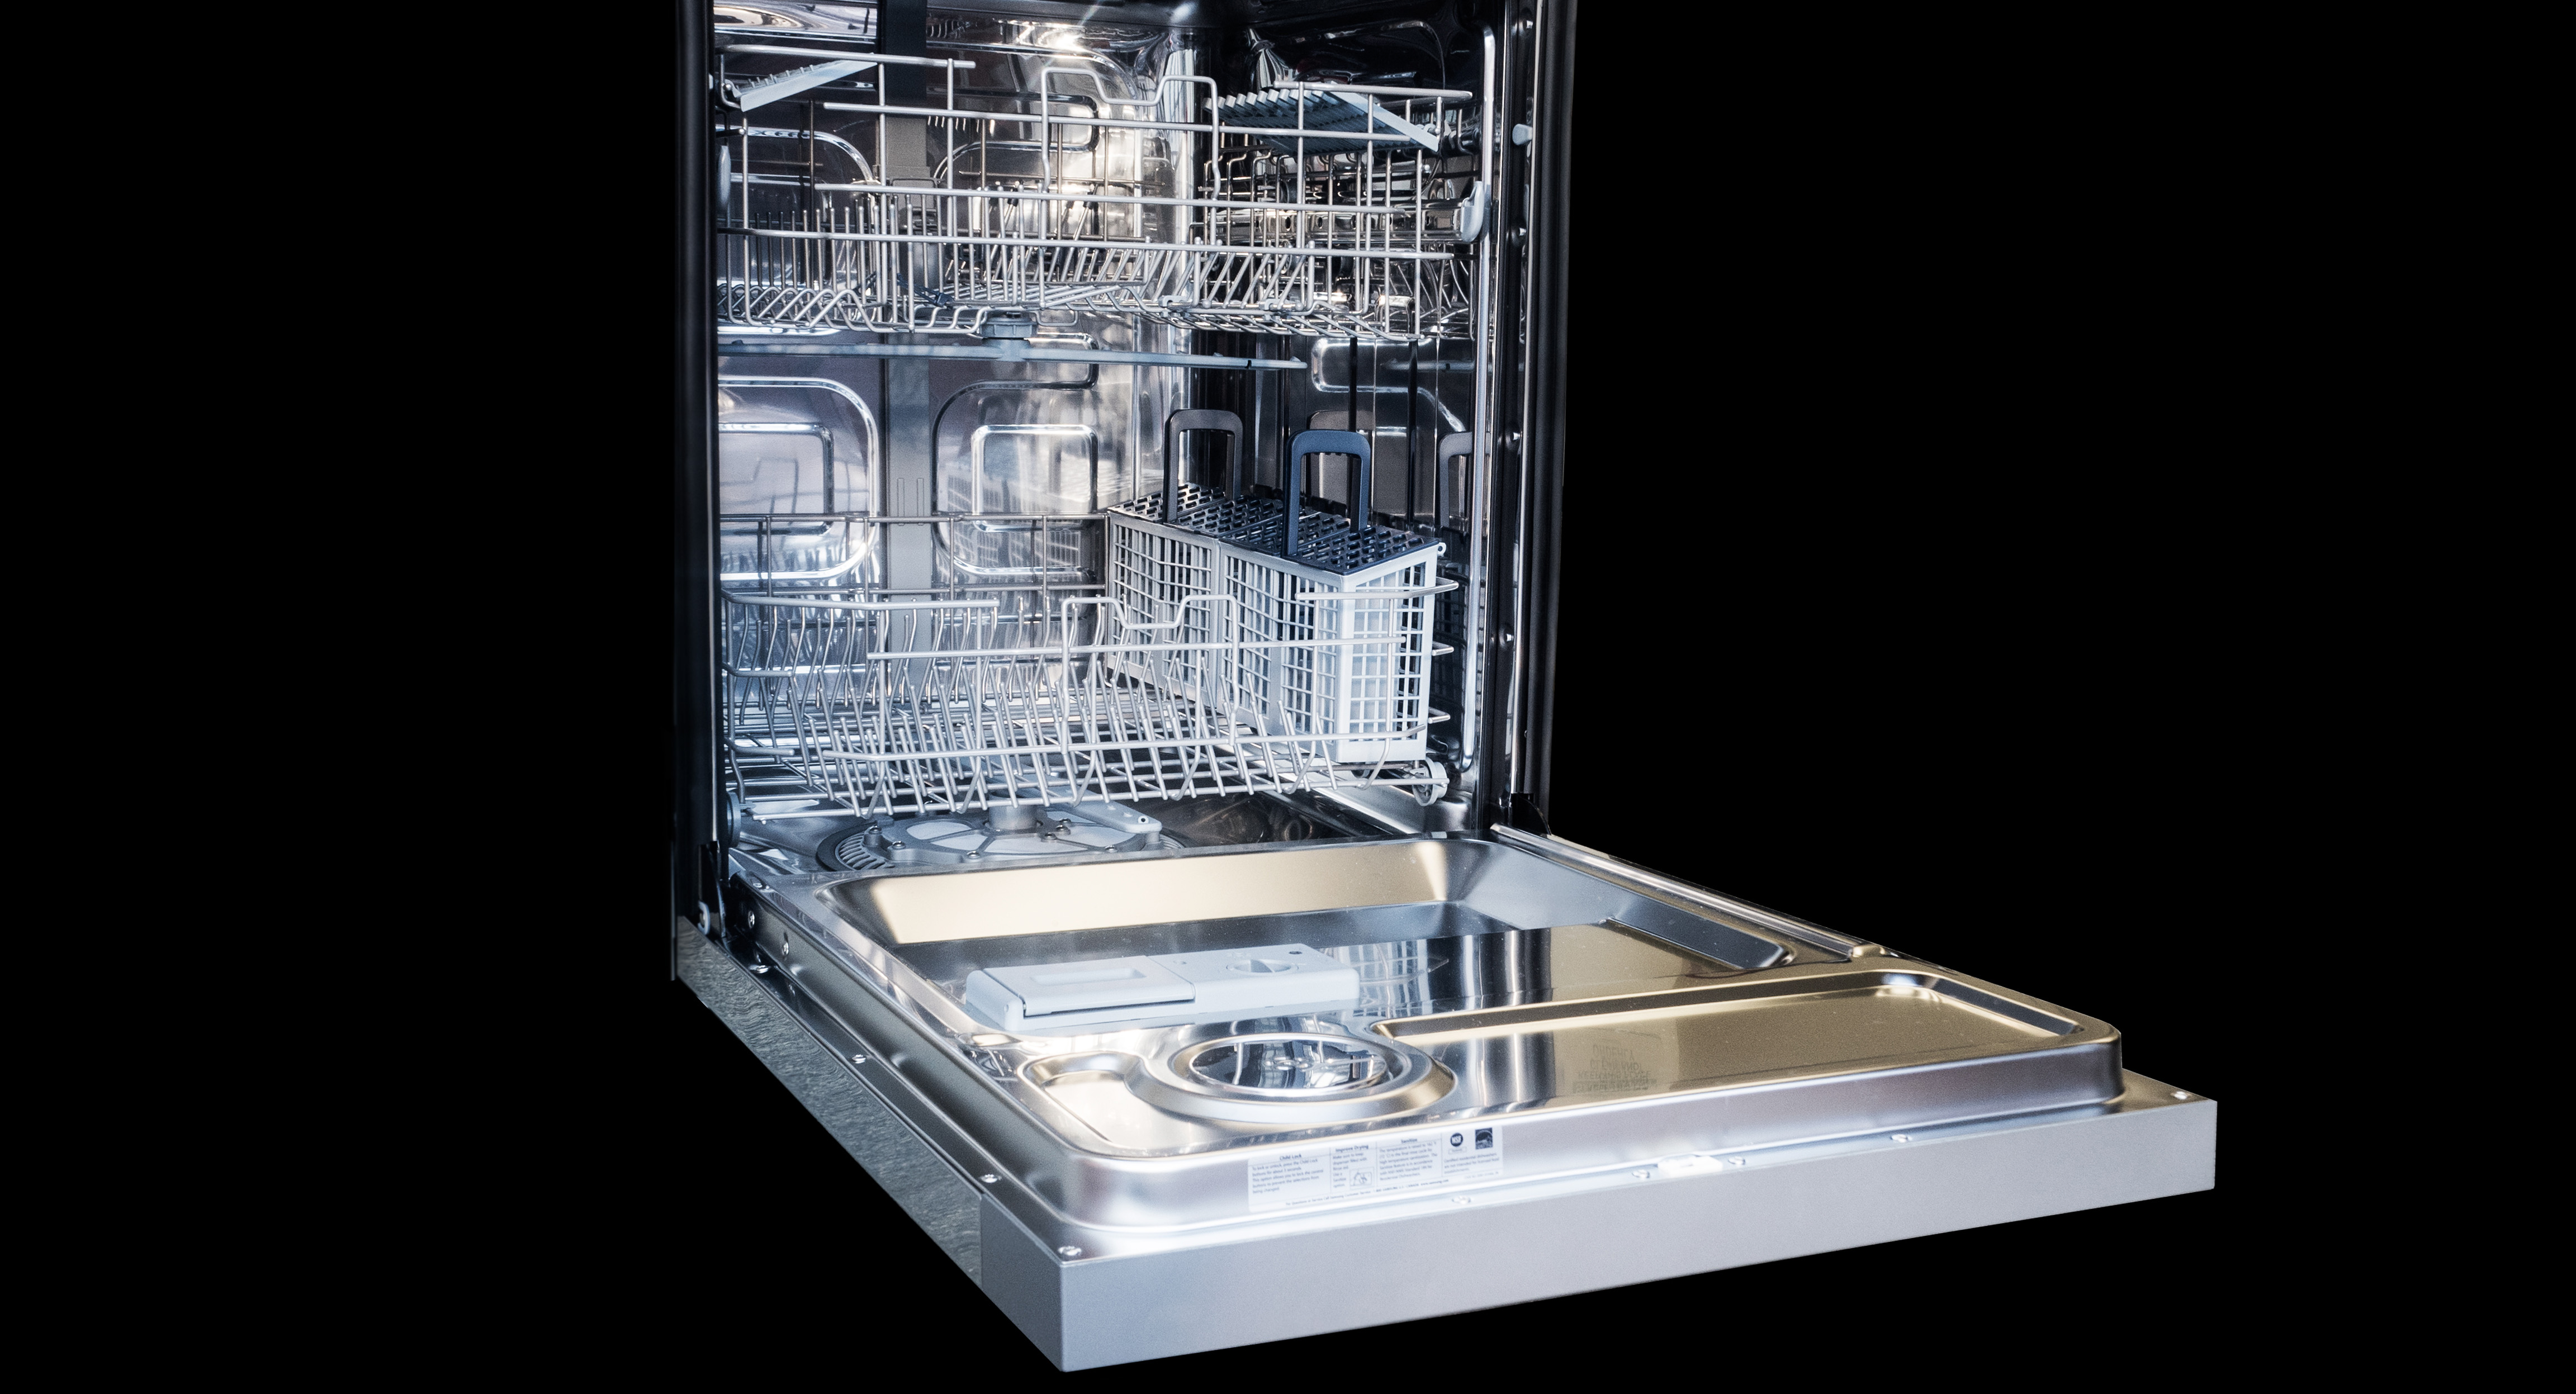 samsung-dw80j3020us-dishwasher-review-reviewed-dishwashers